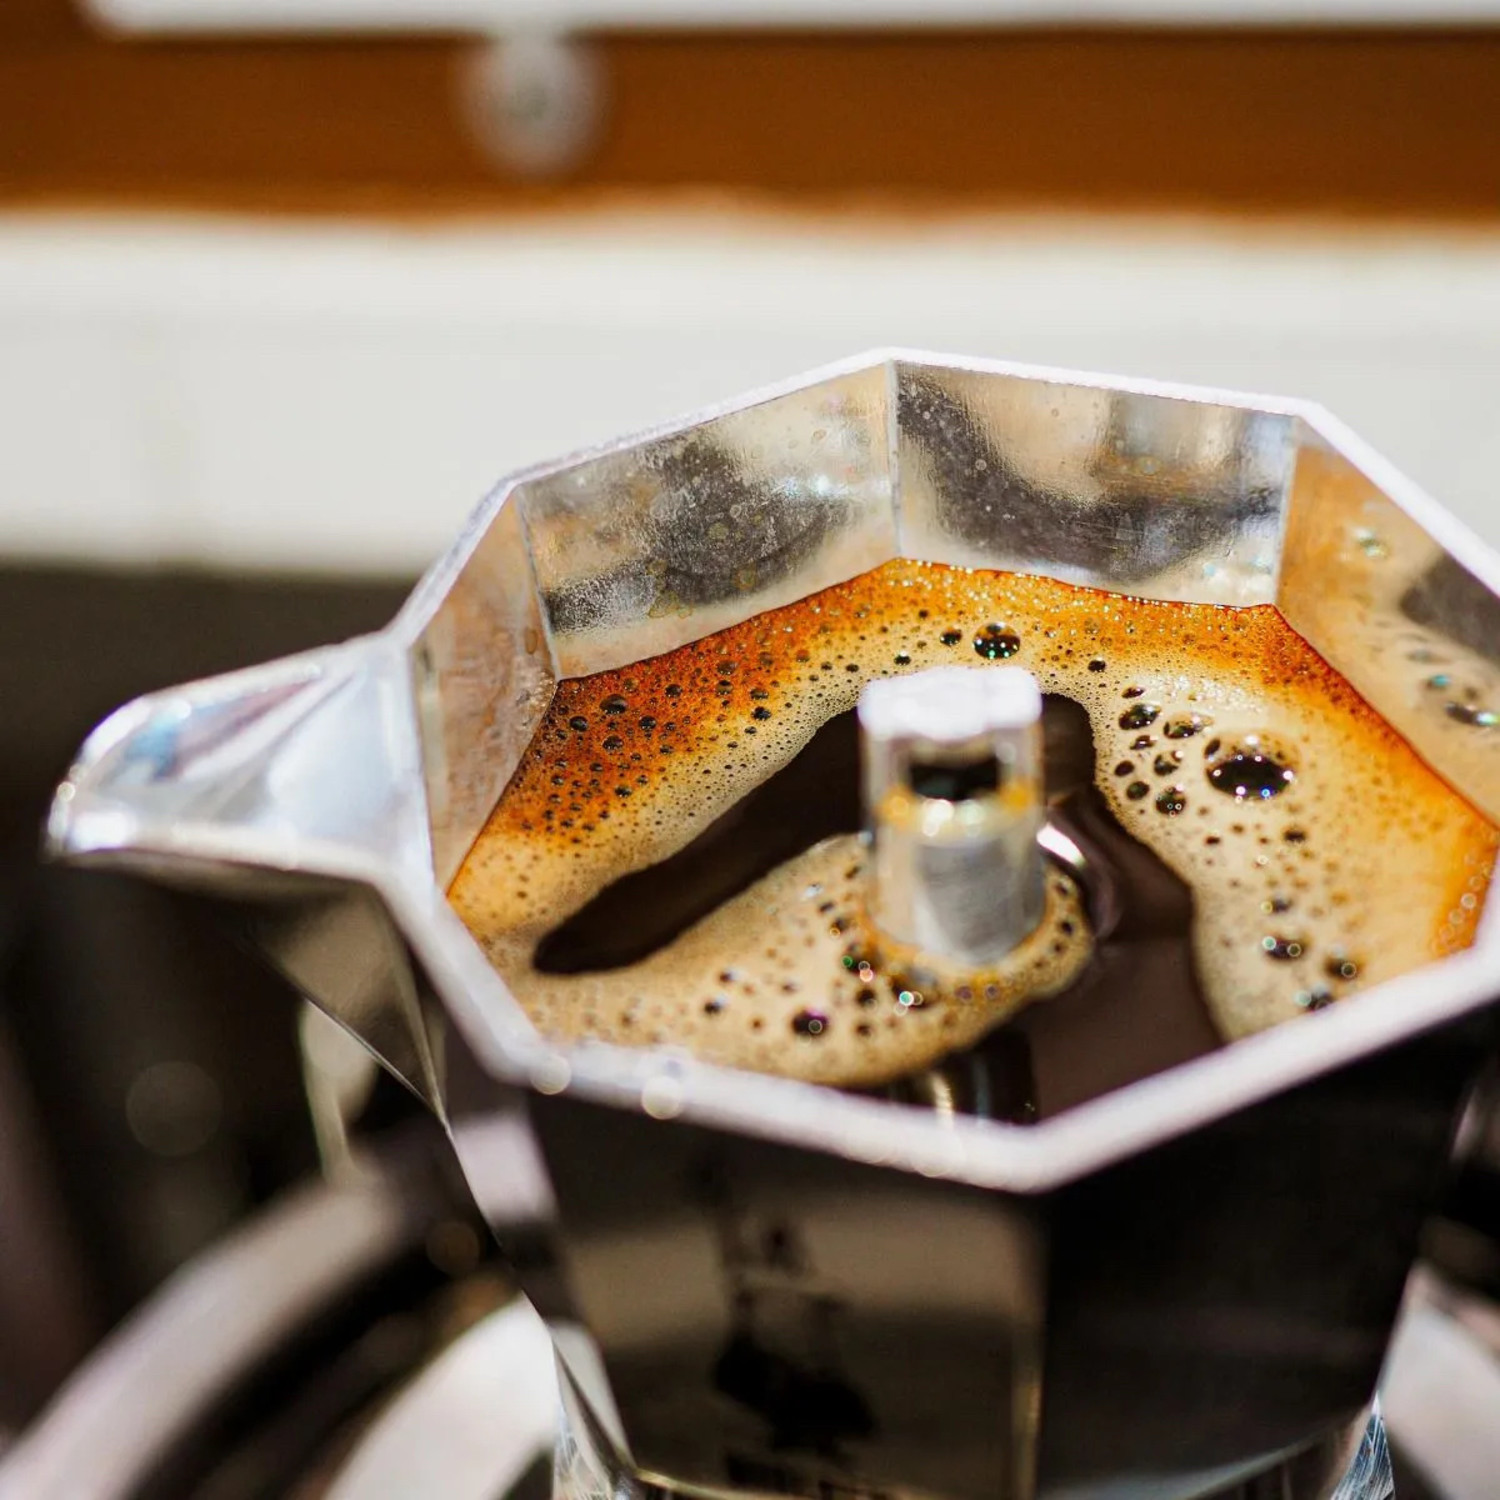 Bialetti 12-Cup Coffee Maker